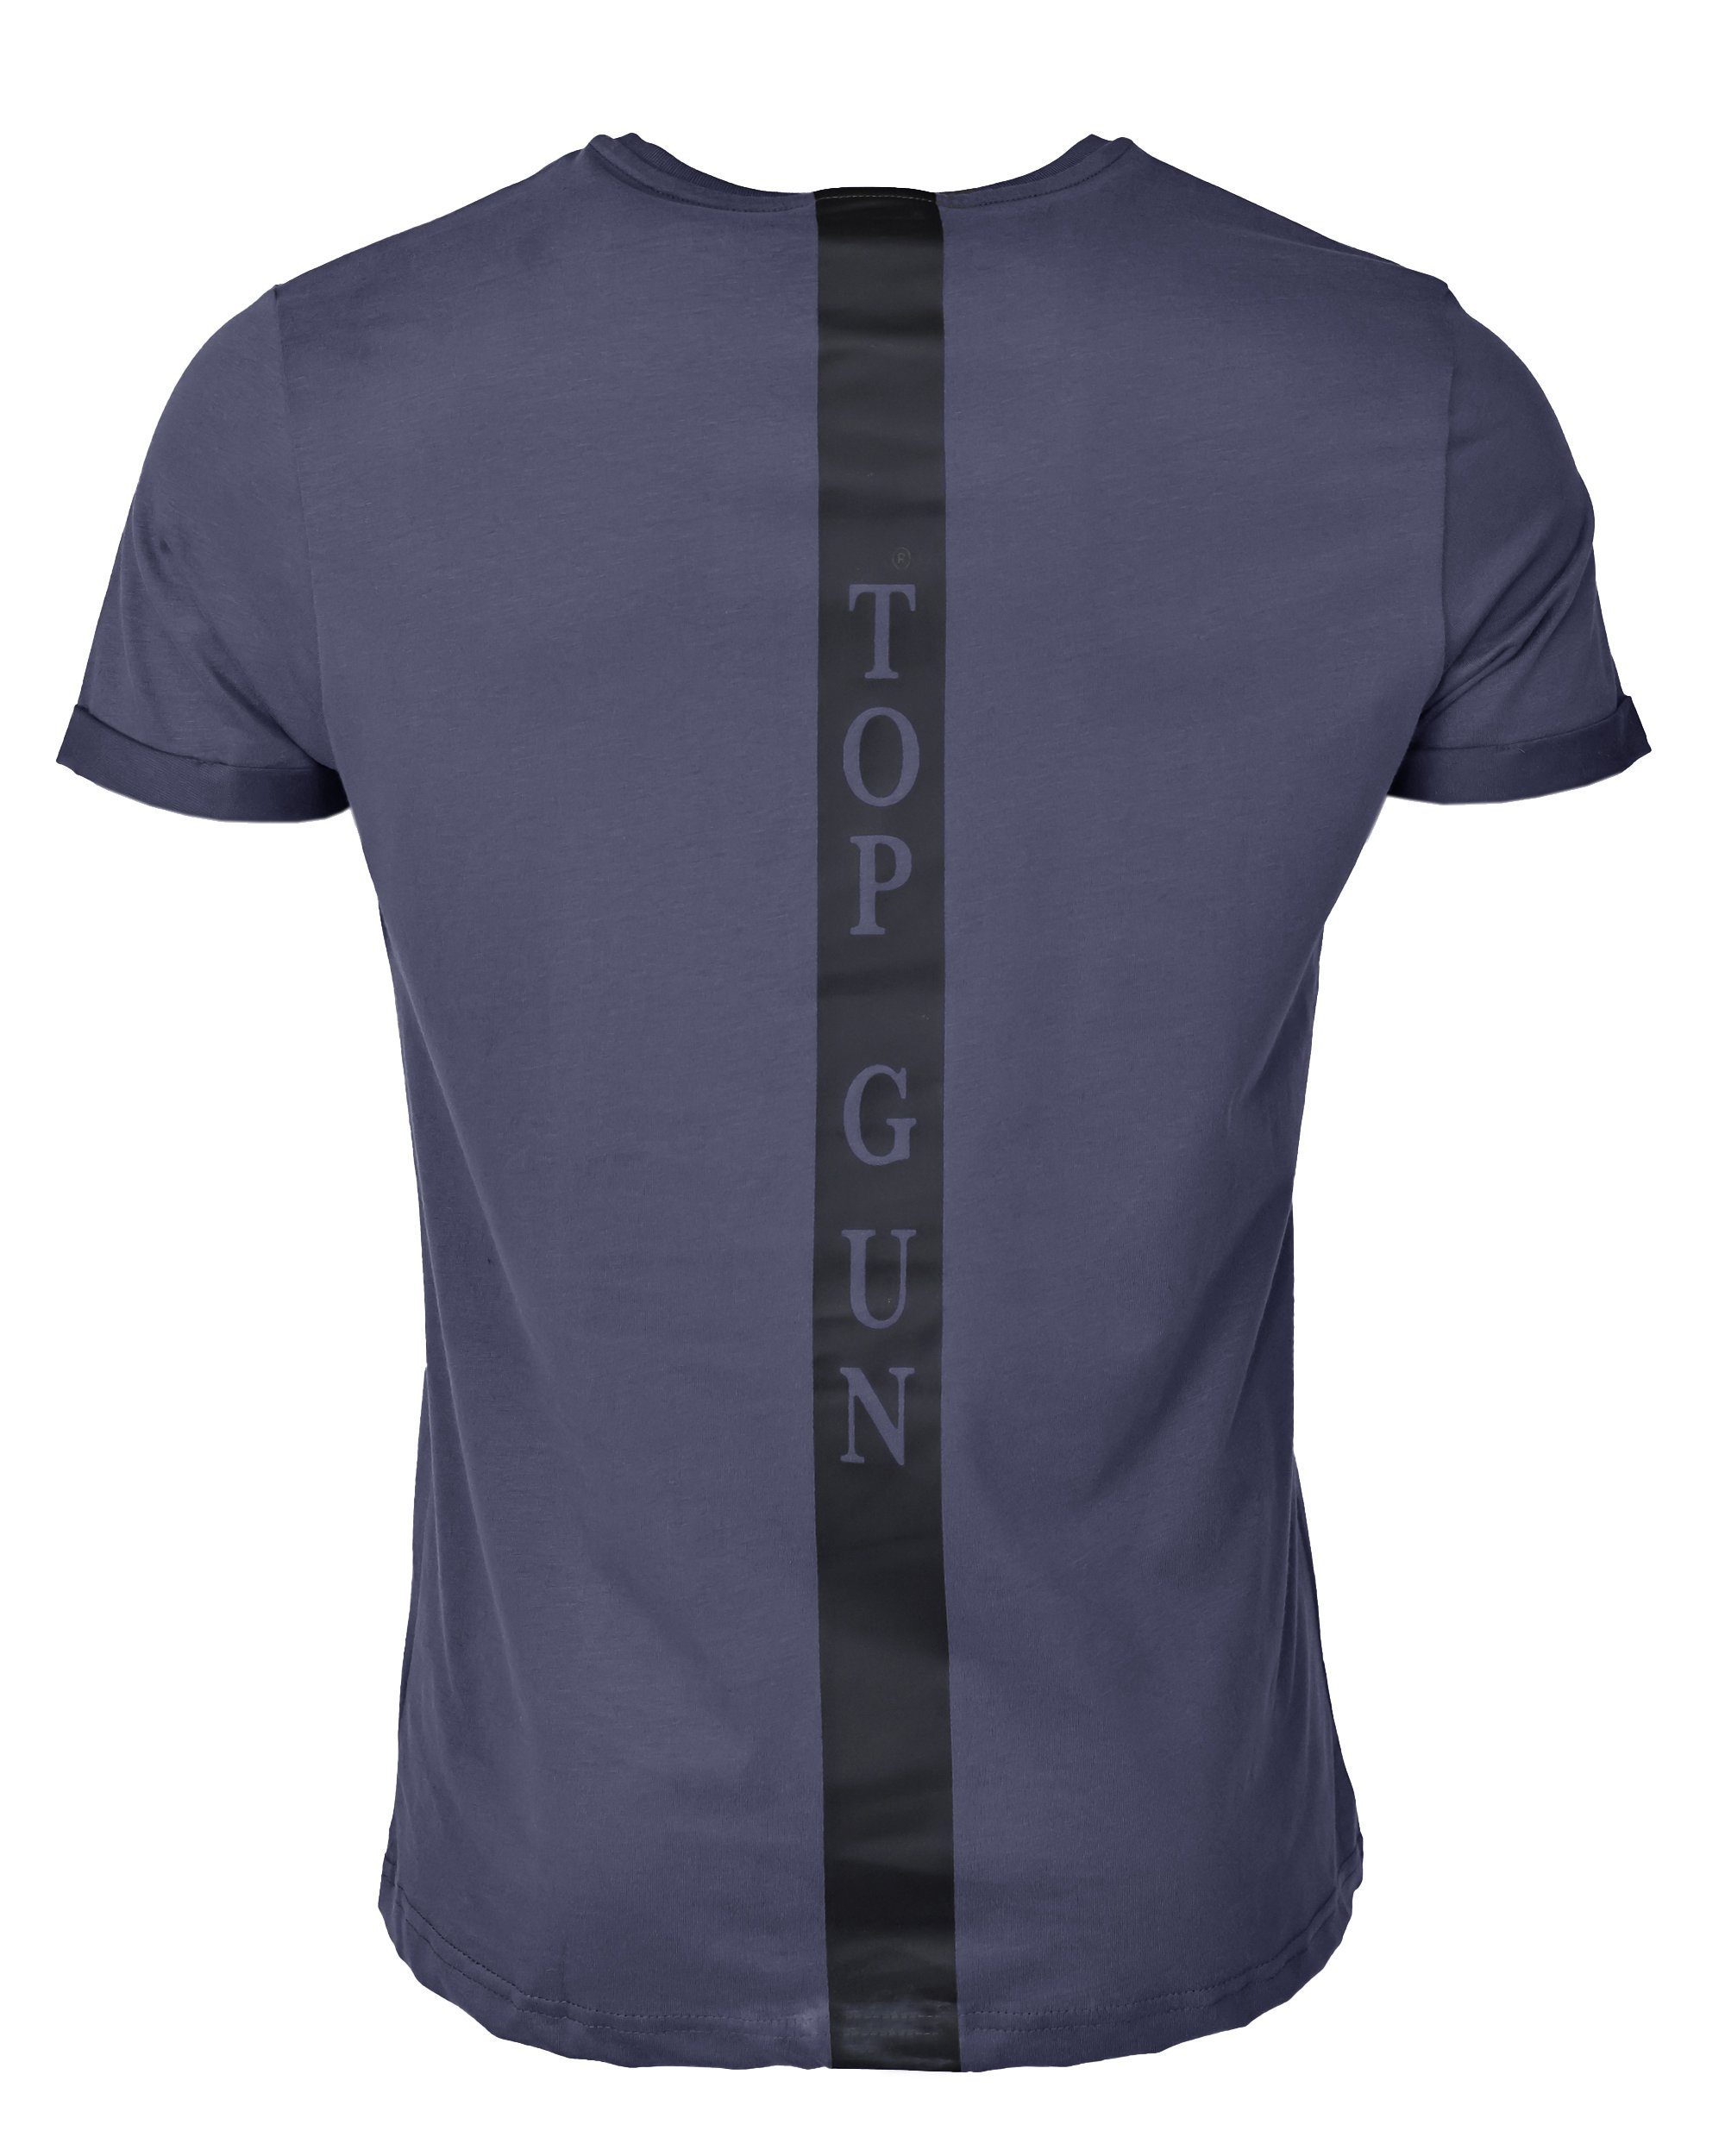 TOP GUN T-Shirt navy TG20213011